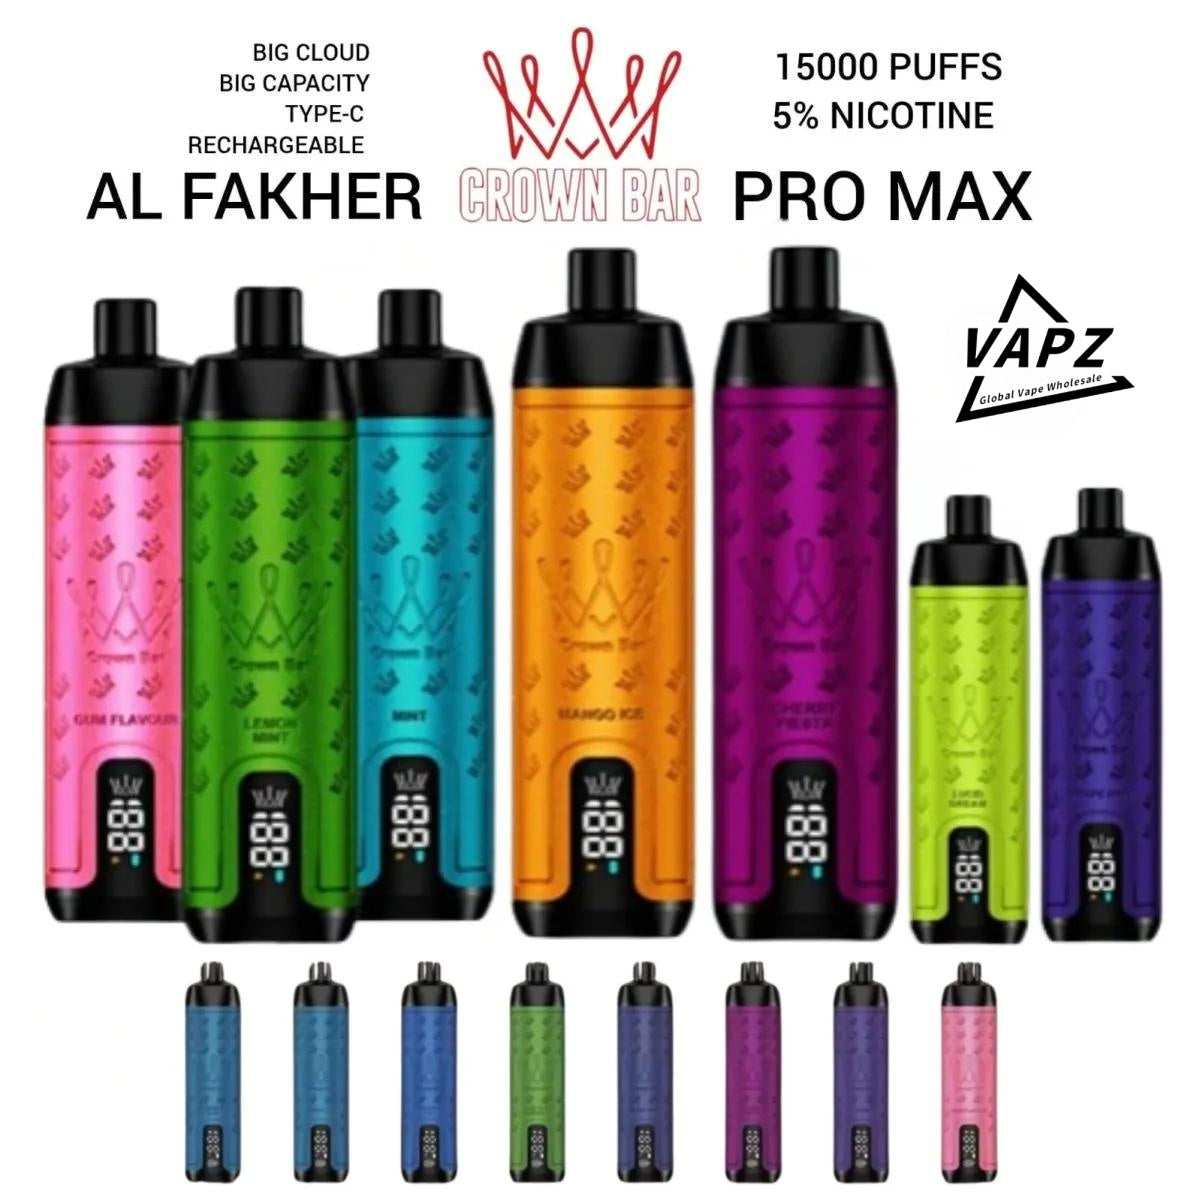 Al Fakher Crown Bar Pro Max Review - A Perfect DLT Disposable Device